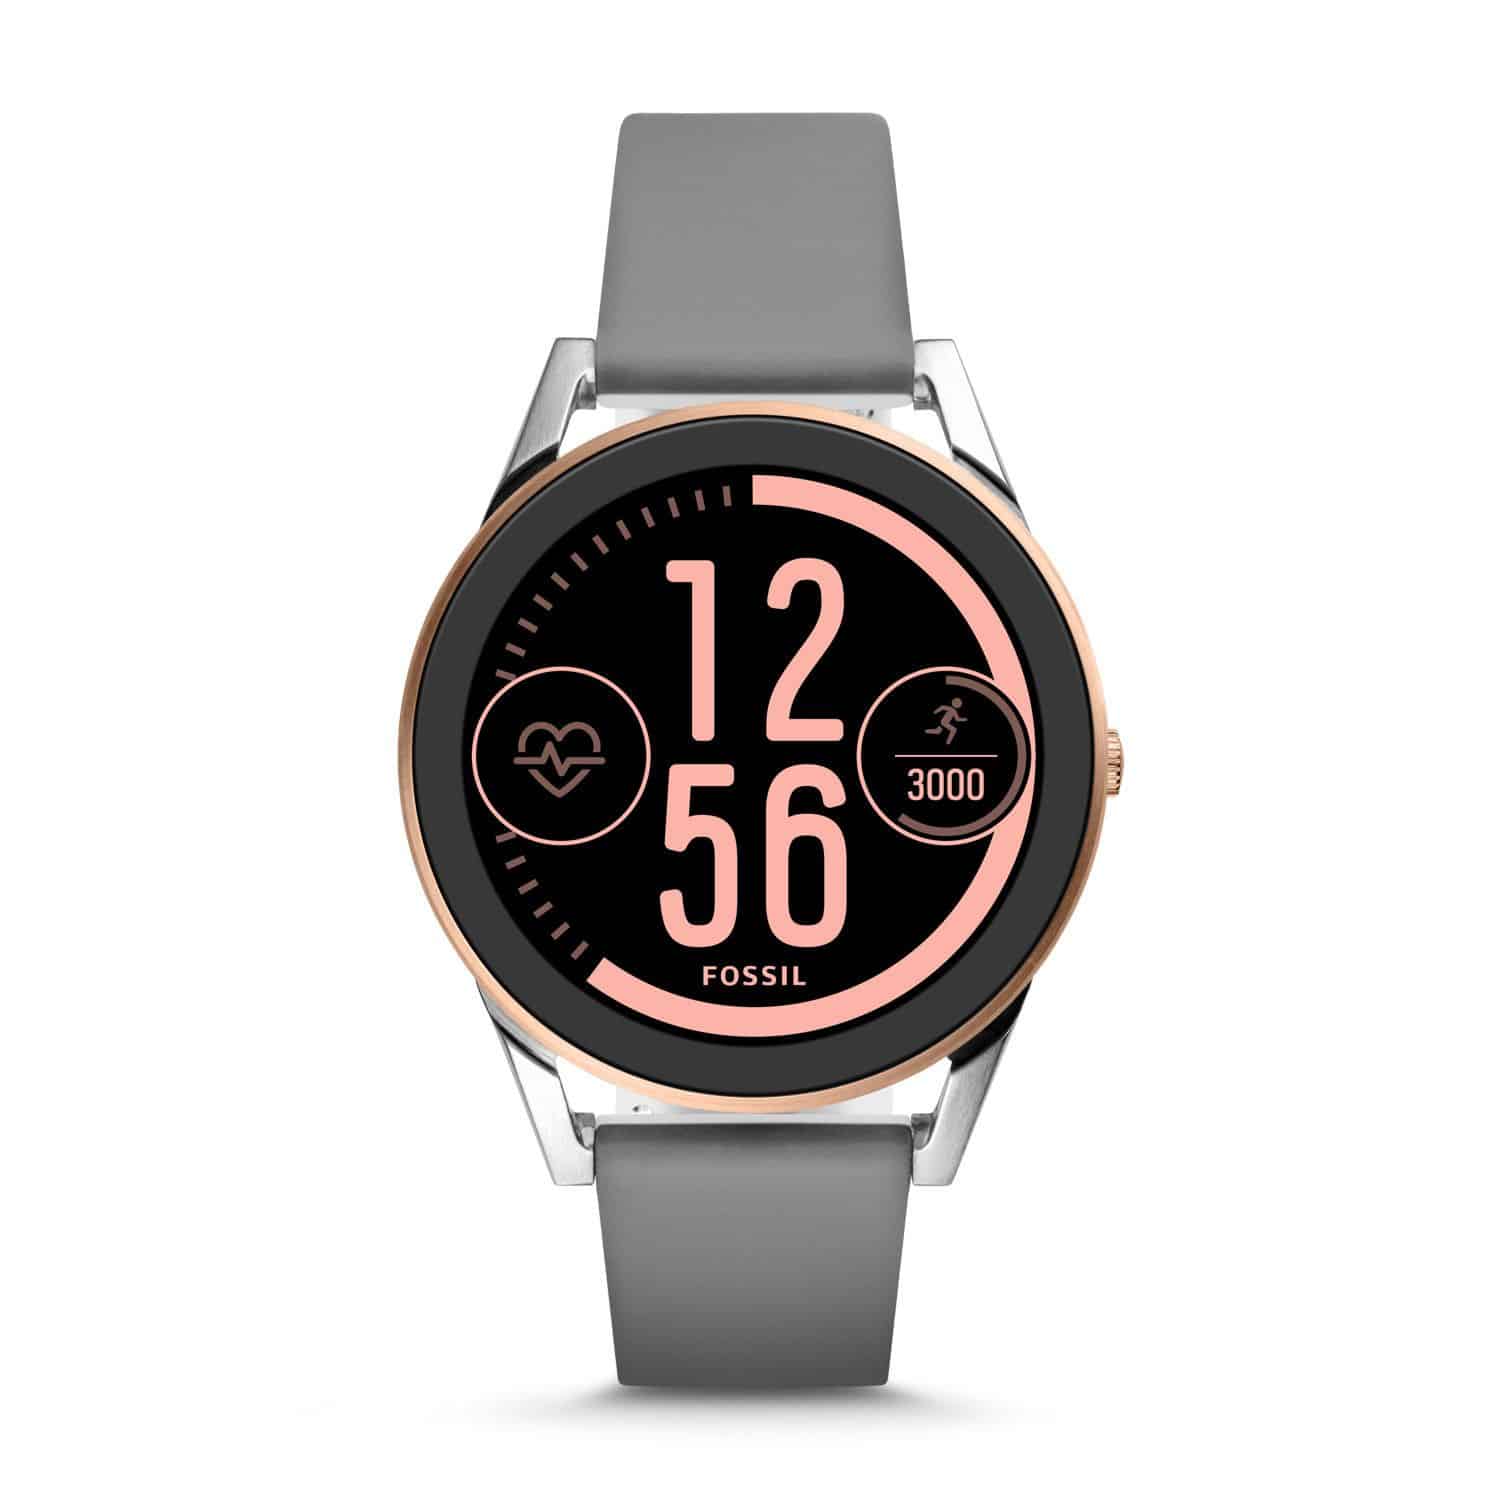 Fossil Sport, une smartwatch sous Wear OS